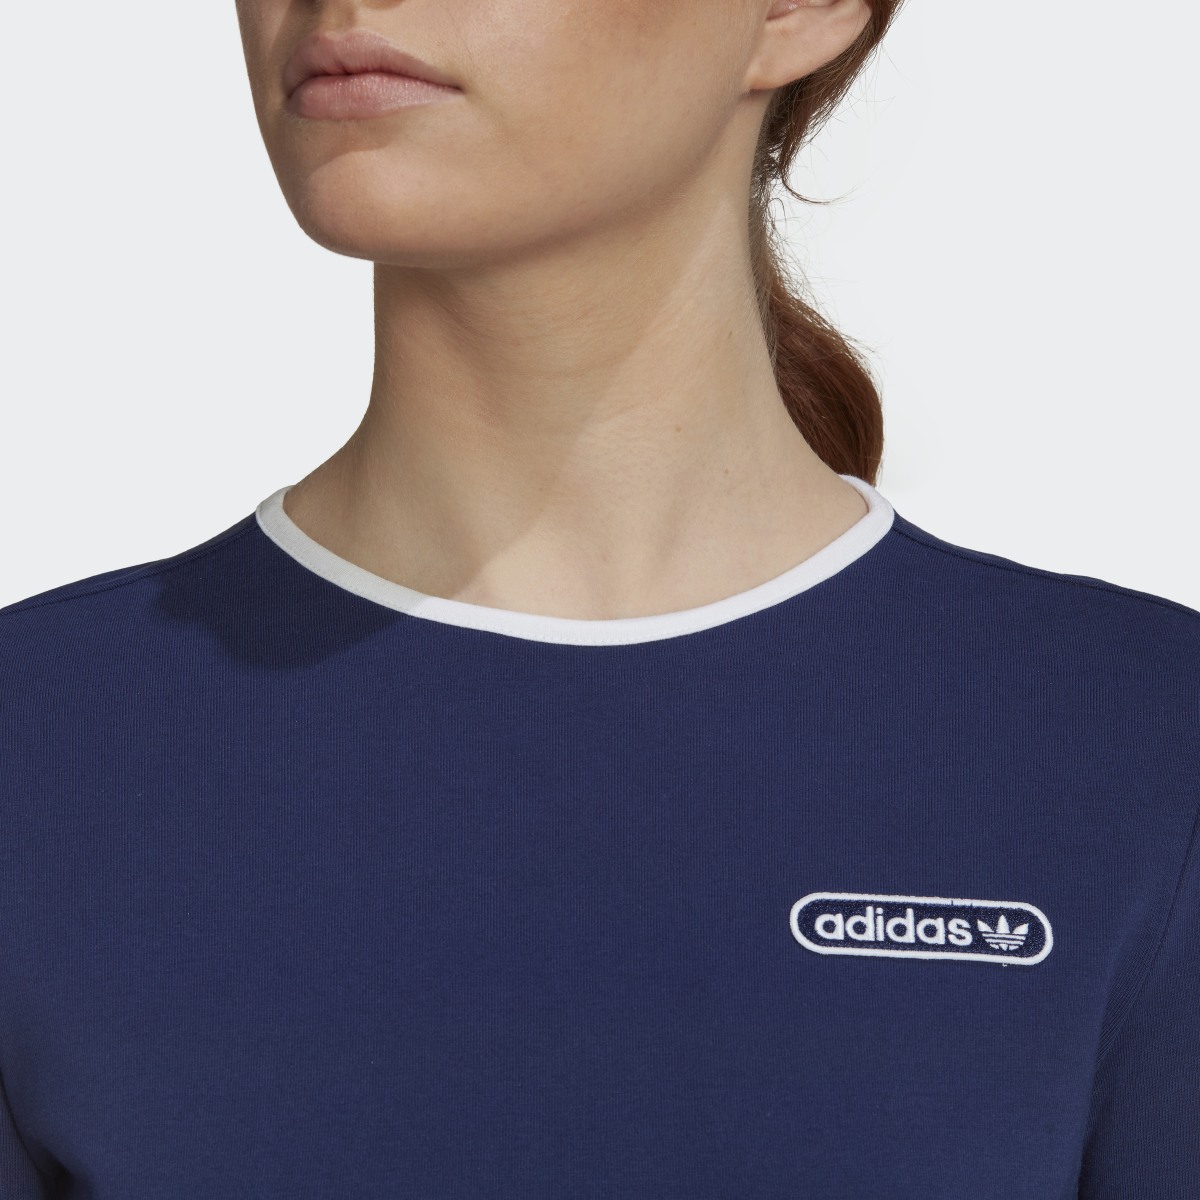 Adidas Binding Details Crop T-Shirt. 7